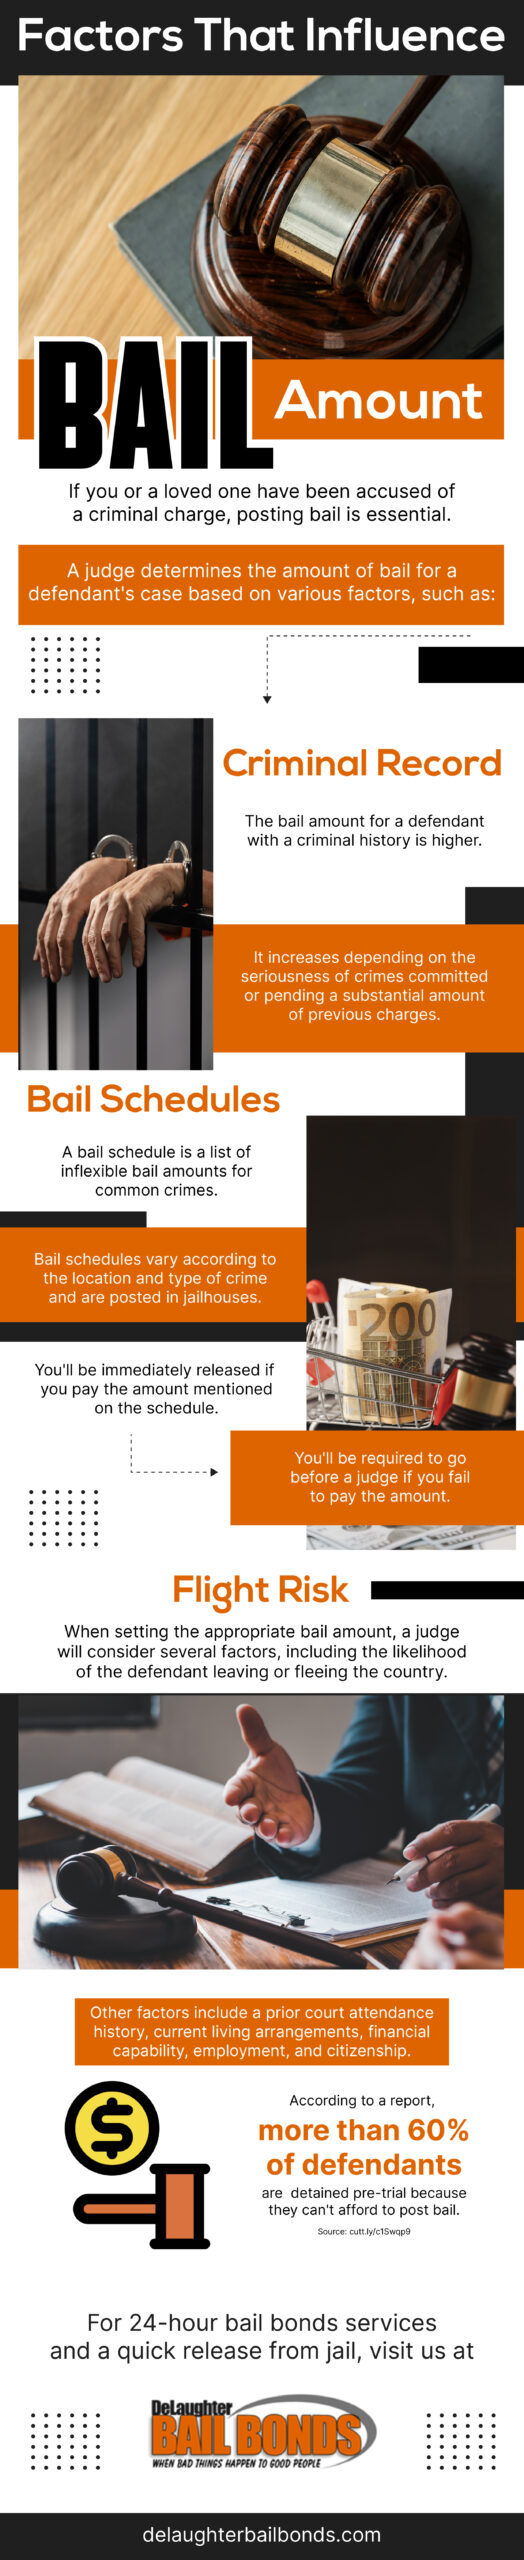 Factors that Influence Bail Amount